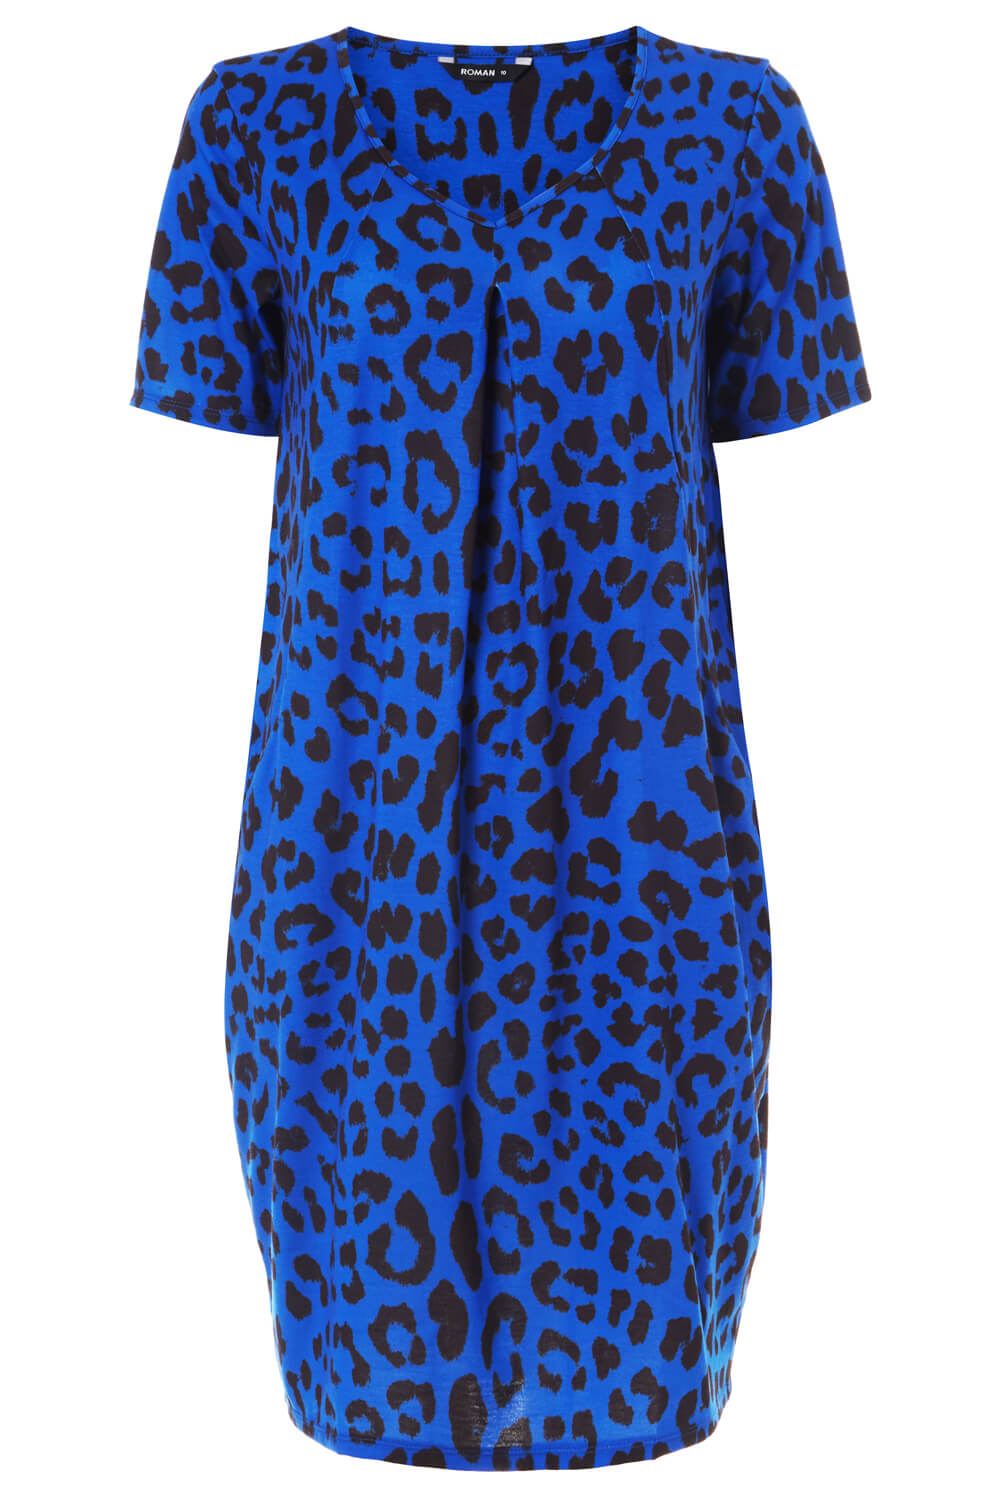 Royal Blue Animal Leopard Print Dress, Image 5 of 5